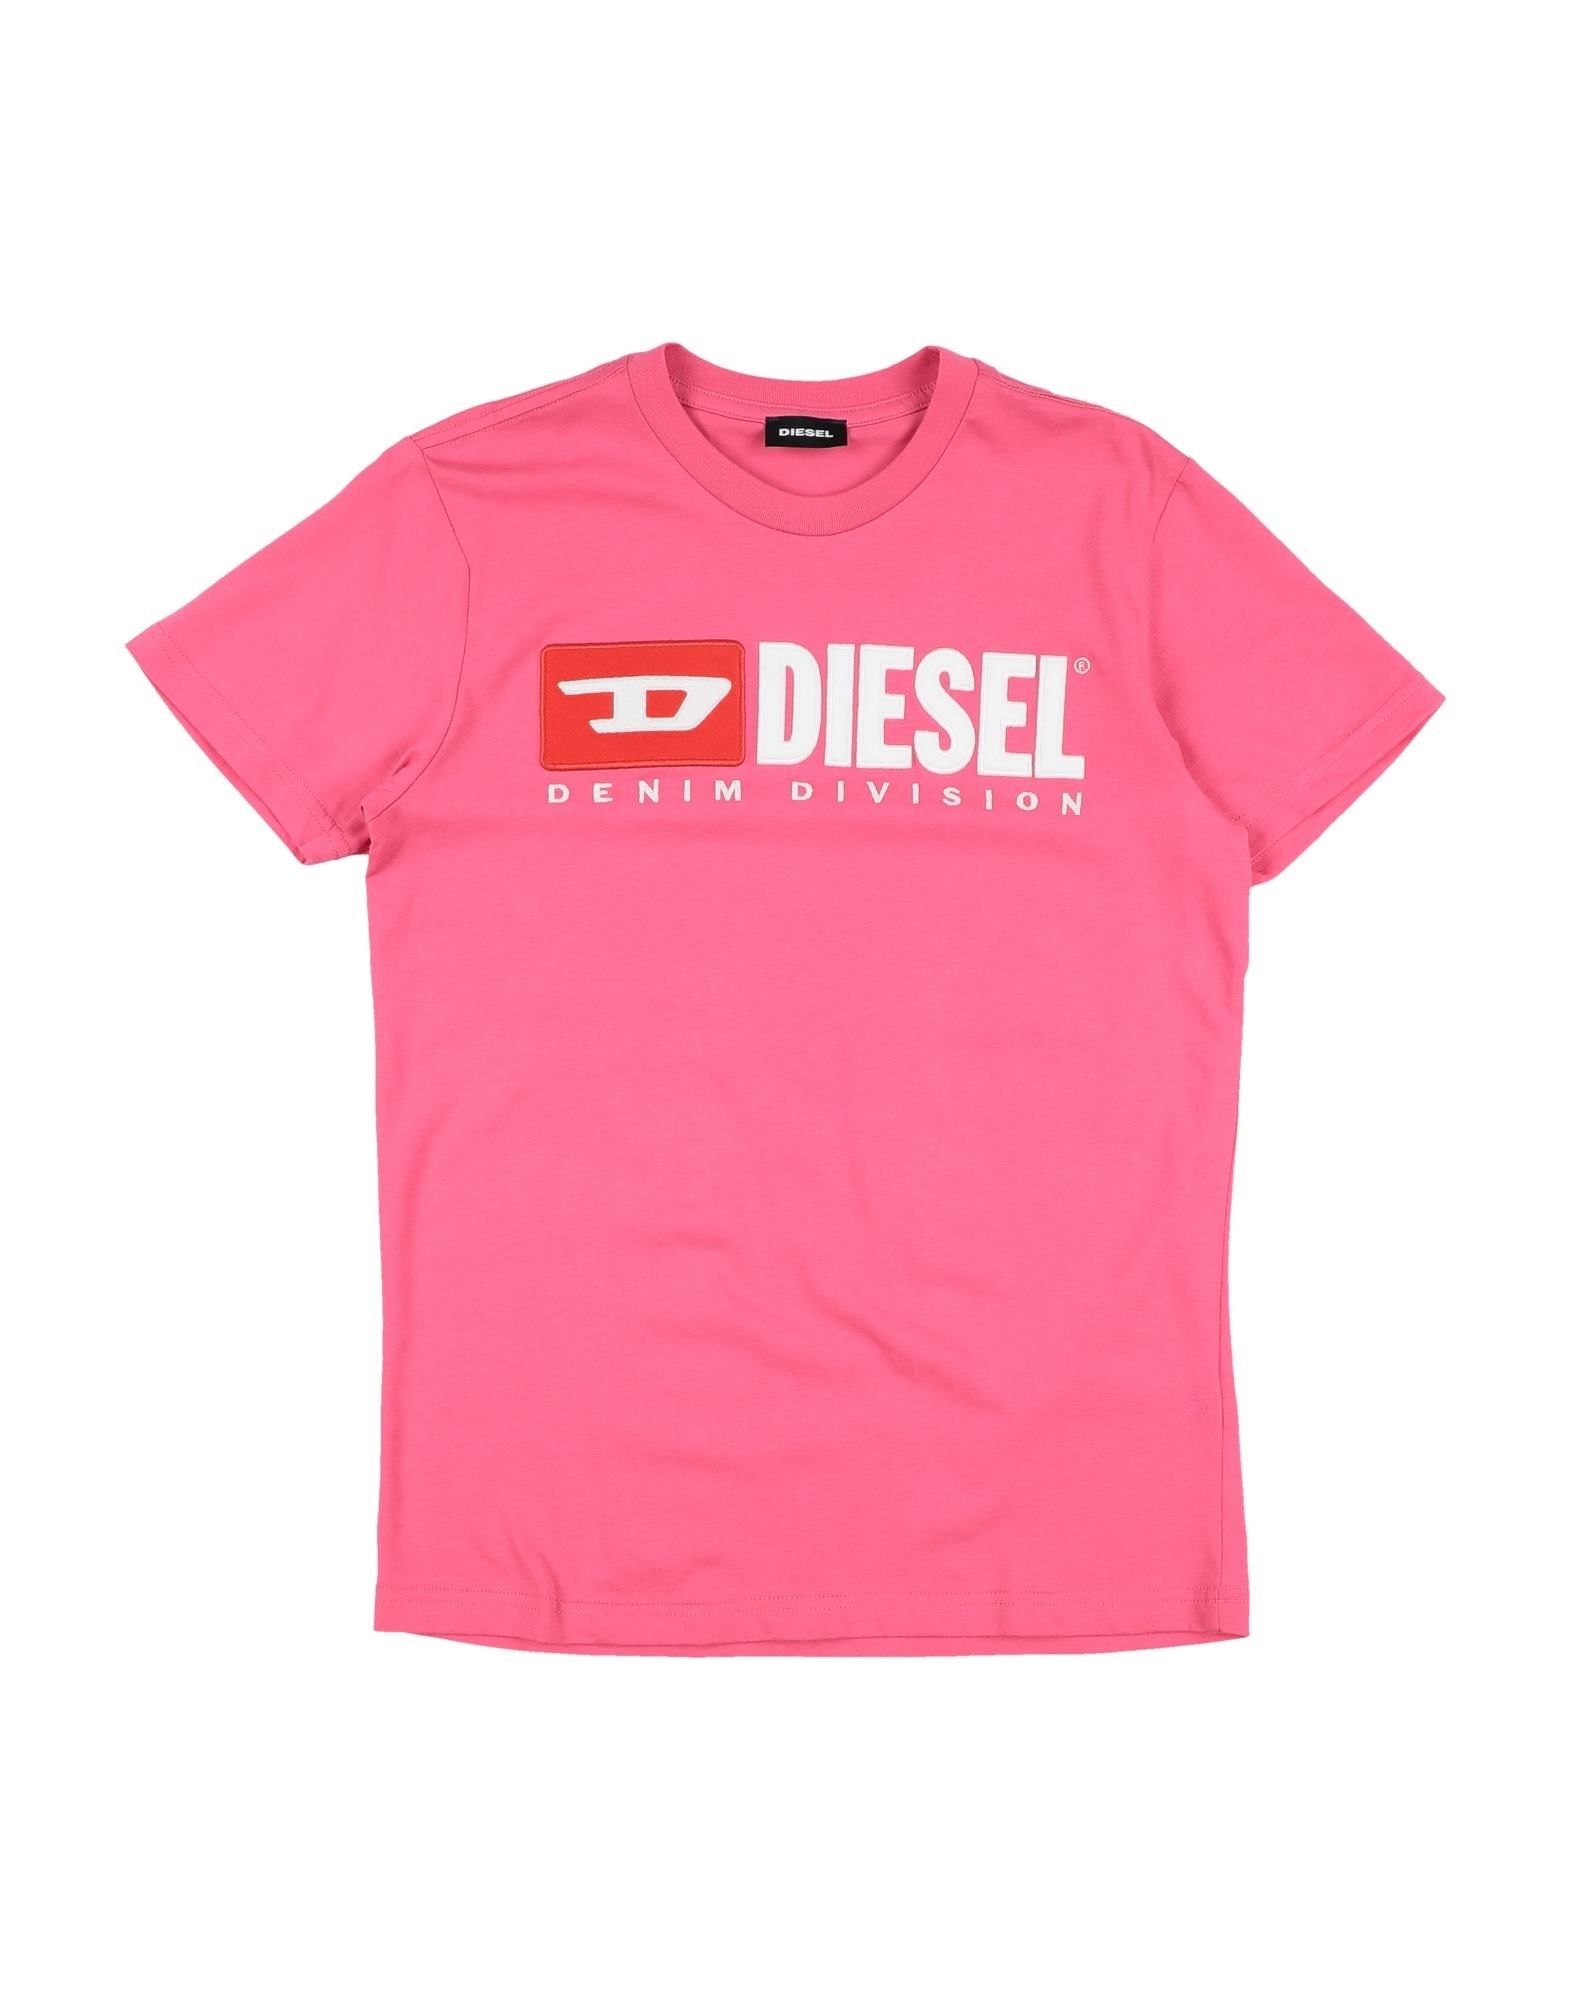 DIESEL T-shirts - Item 12393621